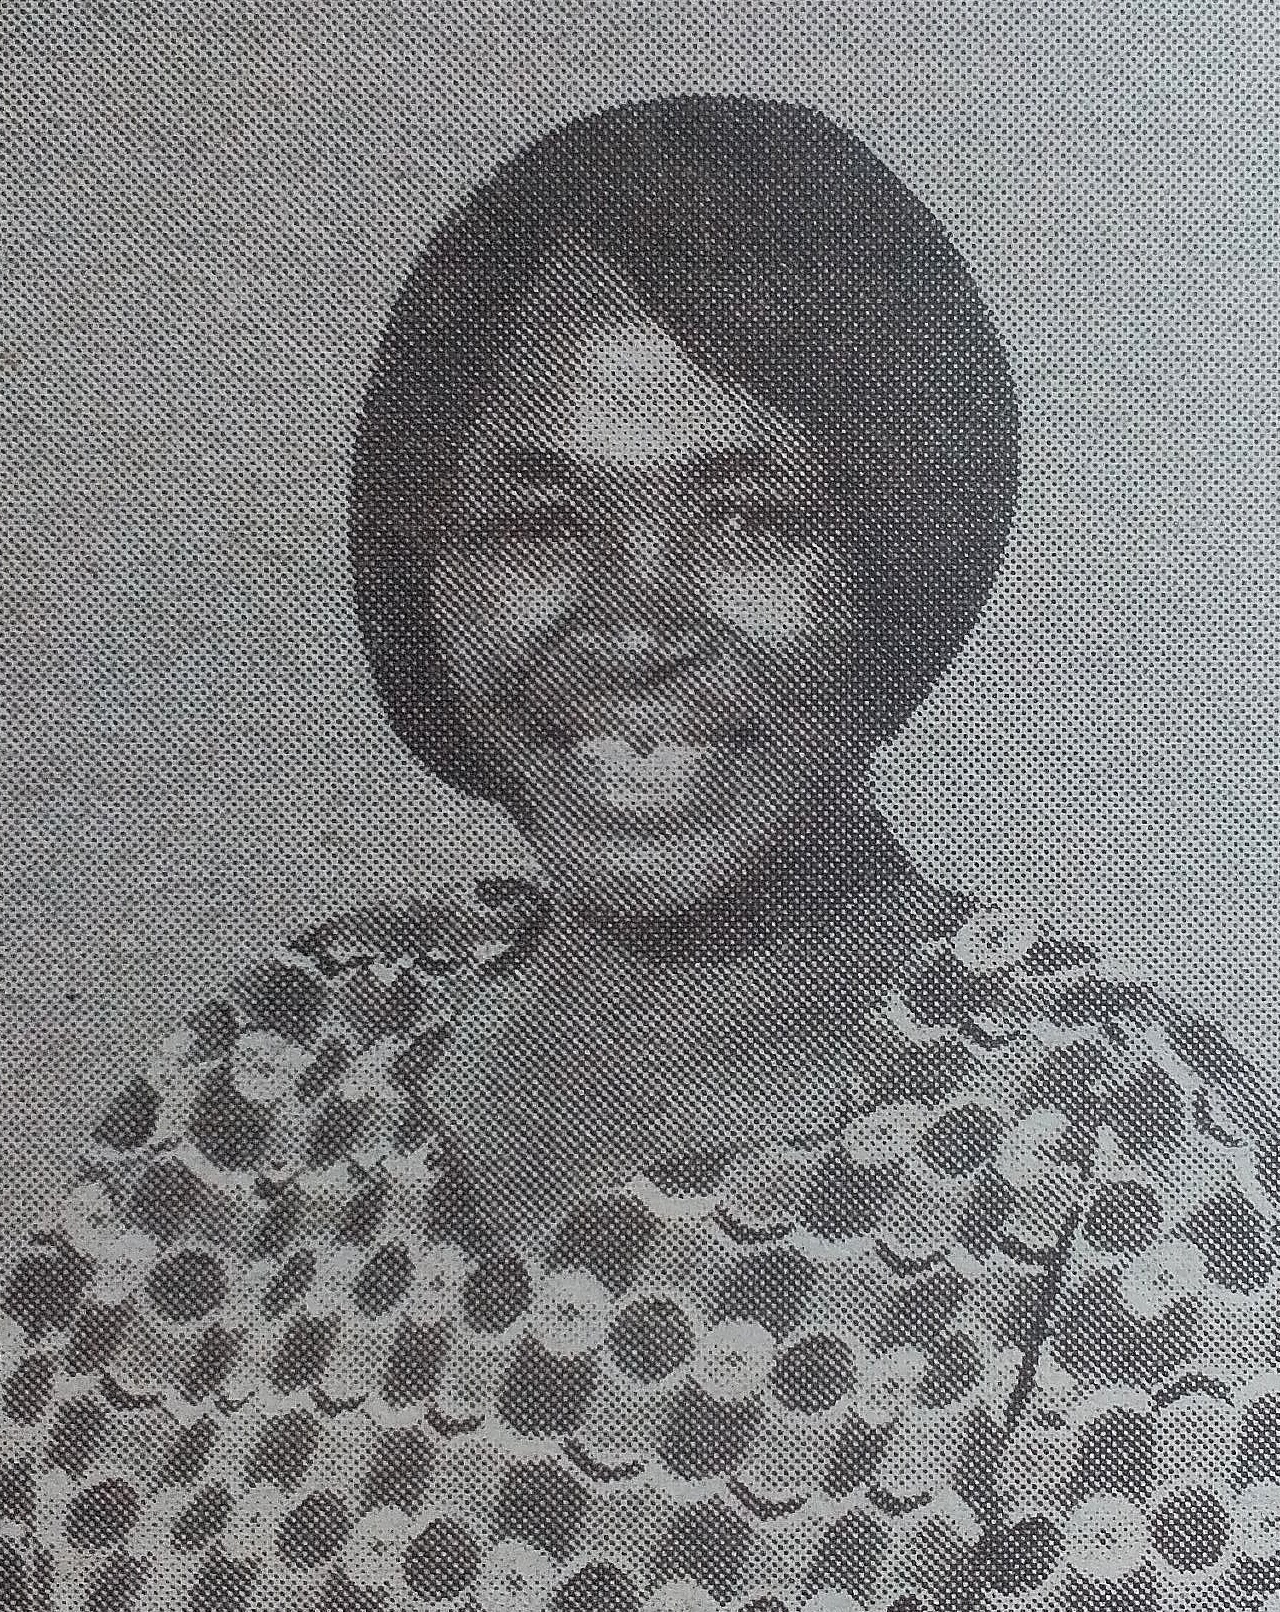 Obituary Image of Hellen Kemunto Mwembi